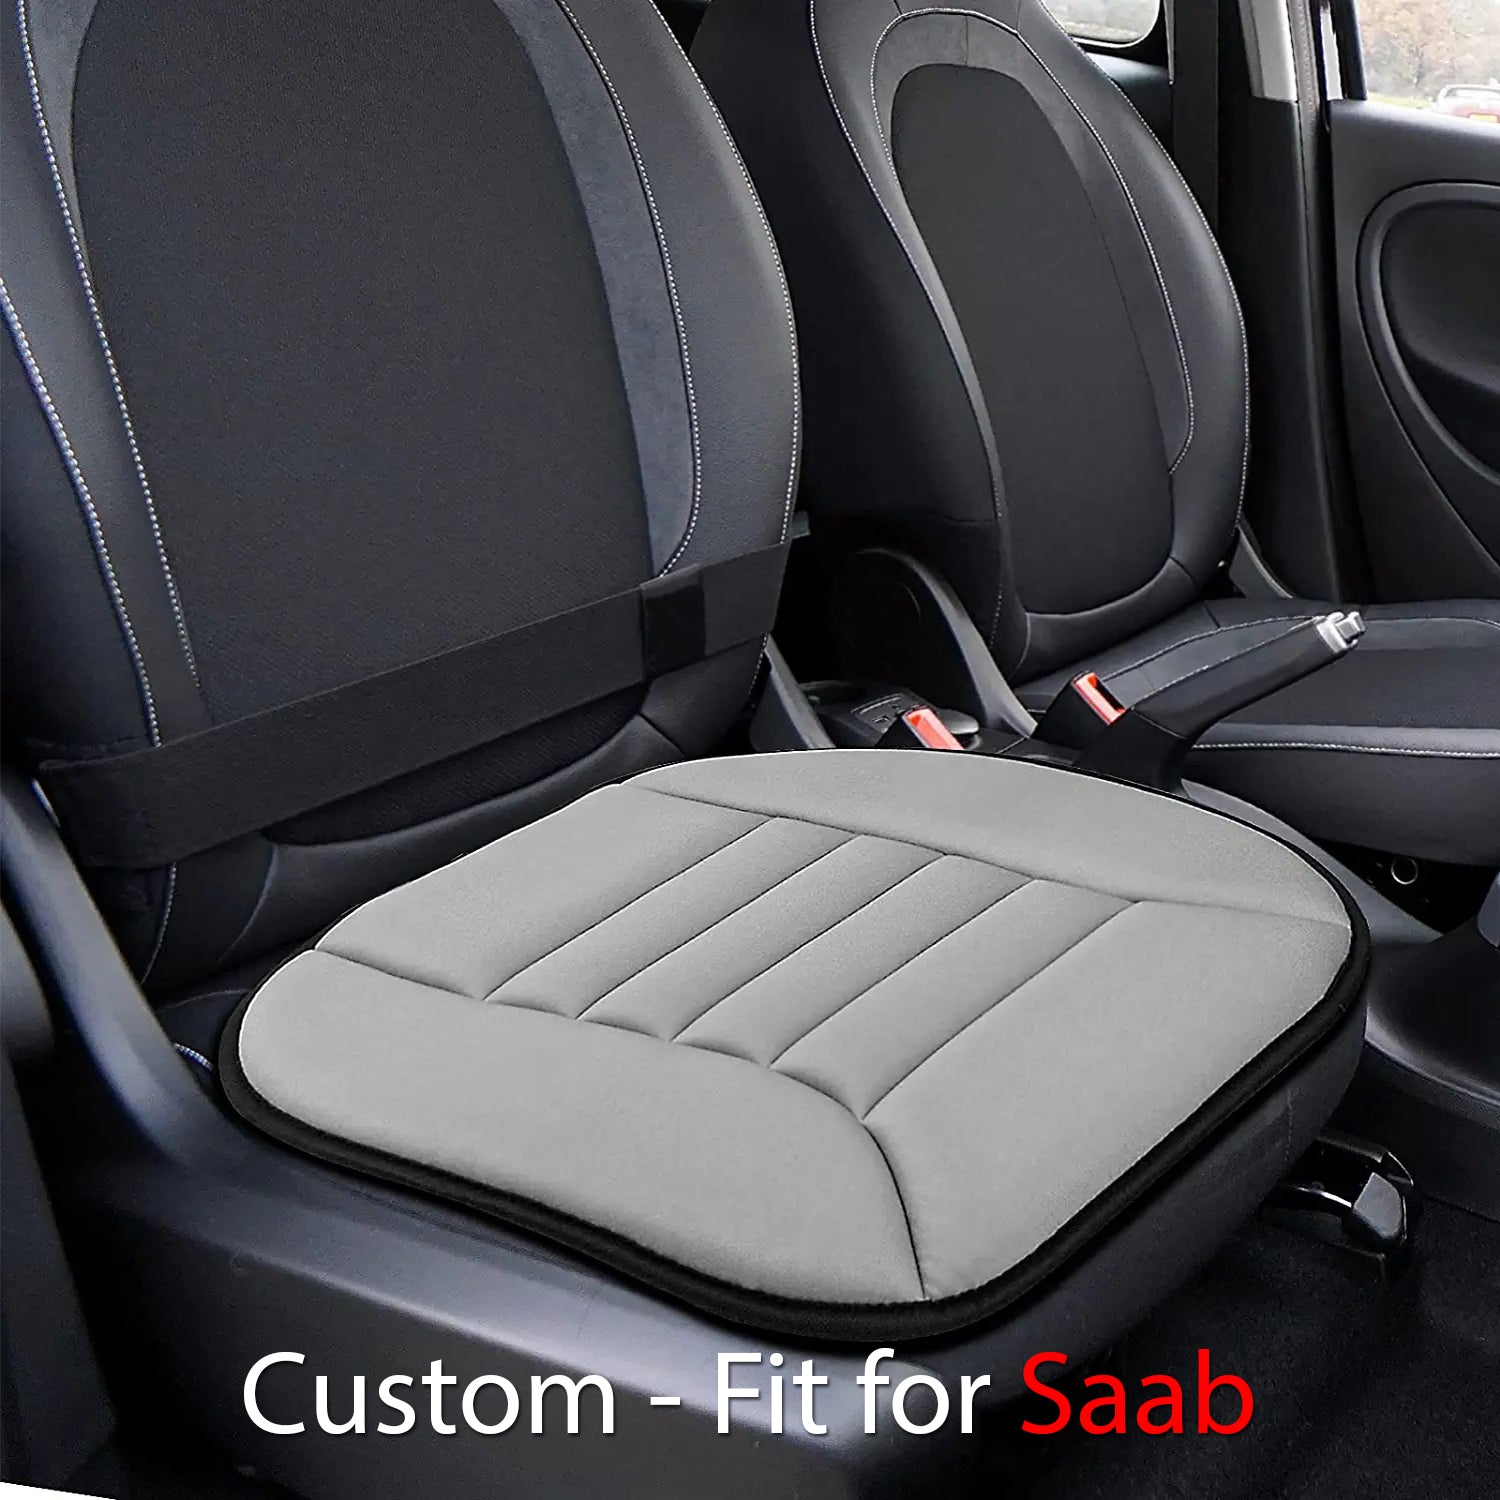 Car Seat Cushion with 1.2inch Comfort Memory Foam, Custom-Fit For Car, Seat Cushion for Car and Office Chair DLSU247